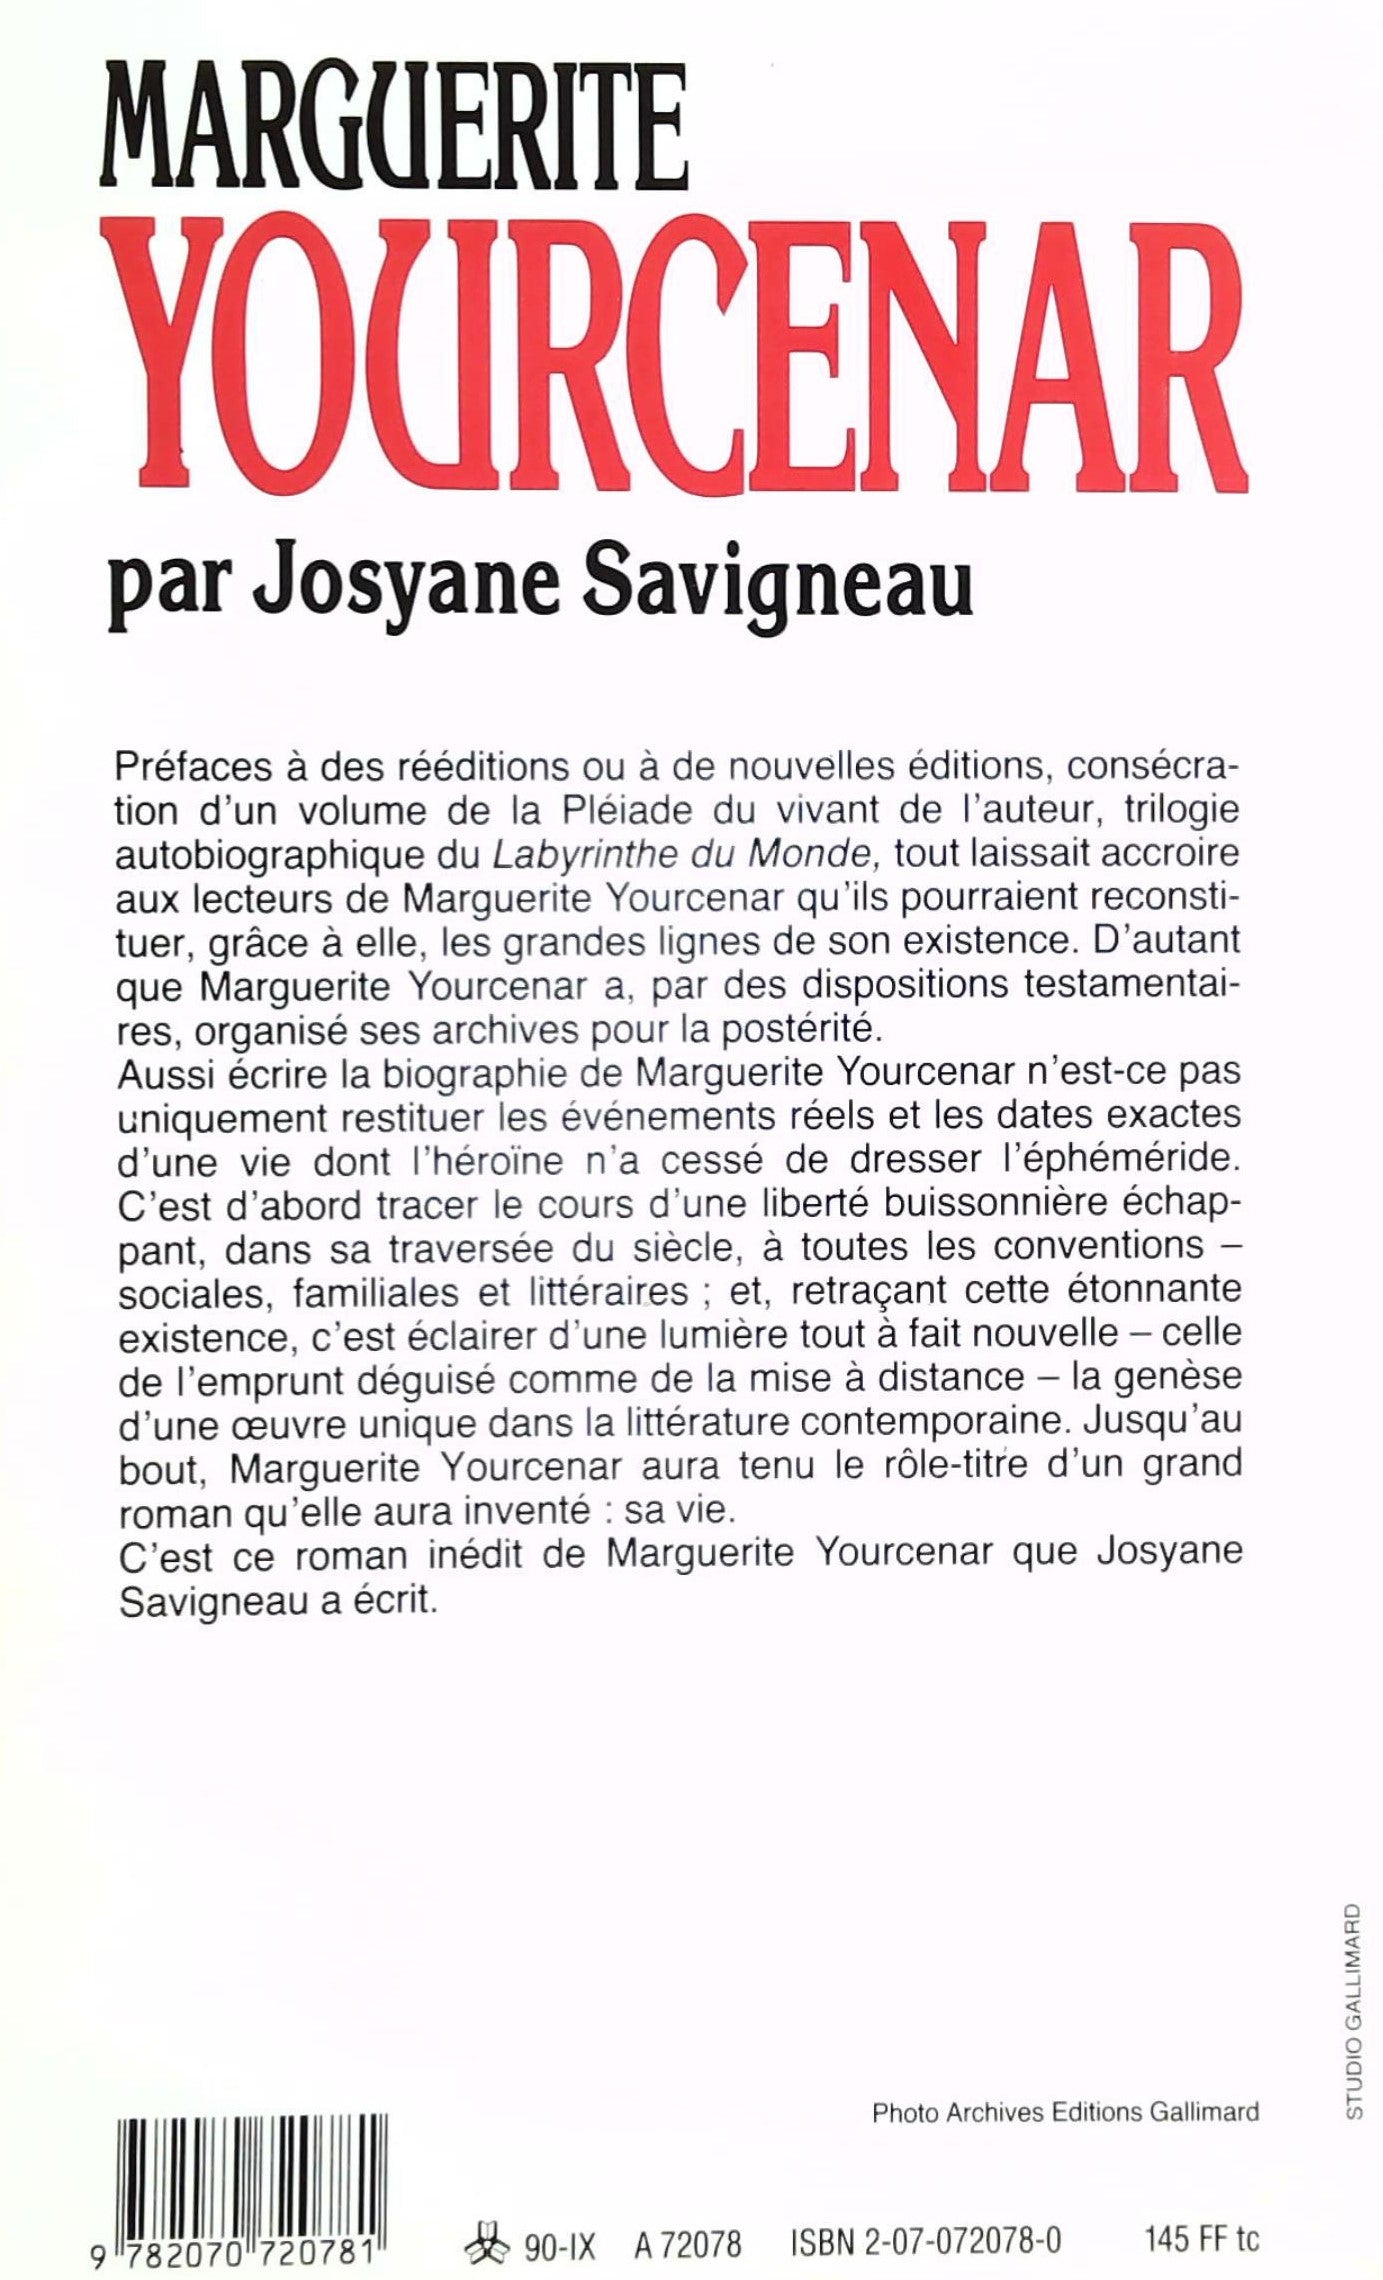 Marguerite Yourcenar (Josyane Savigneau)